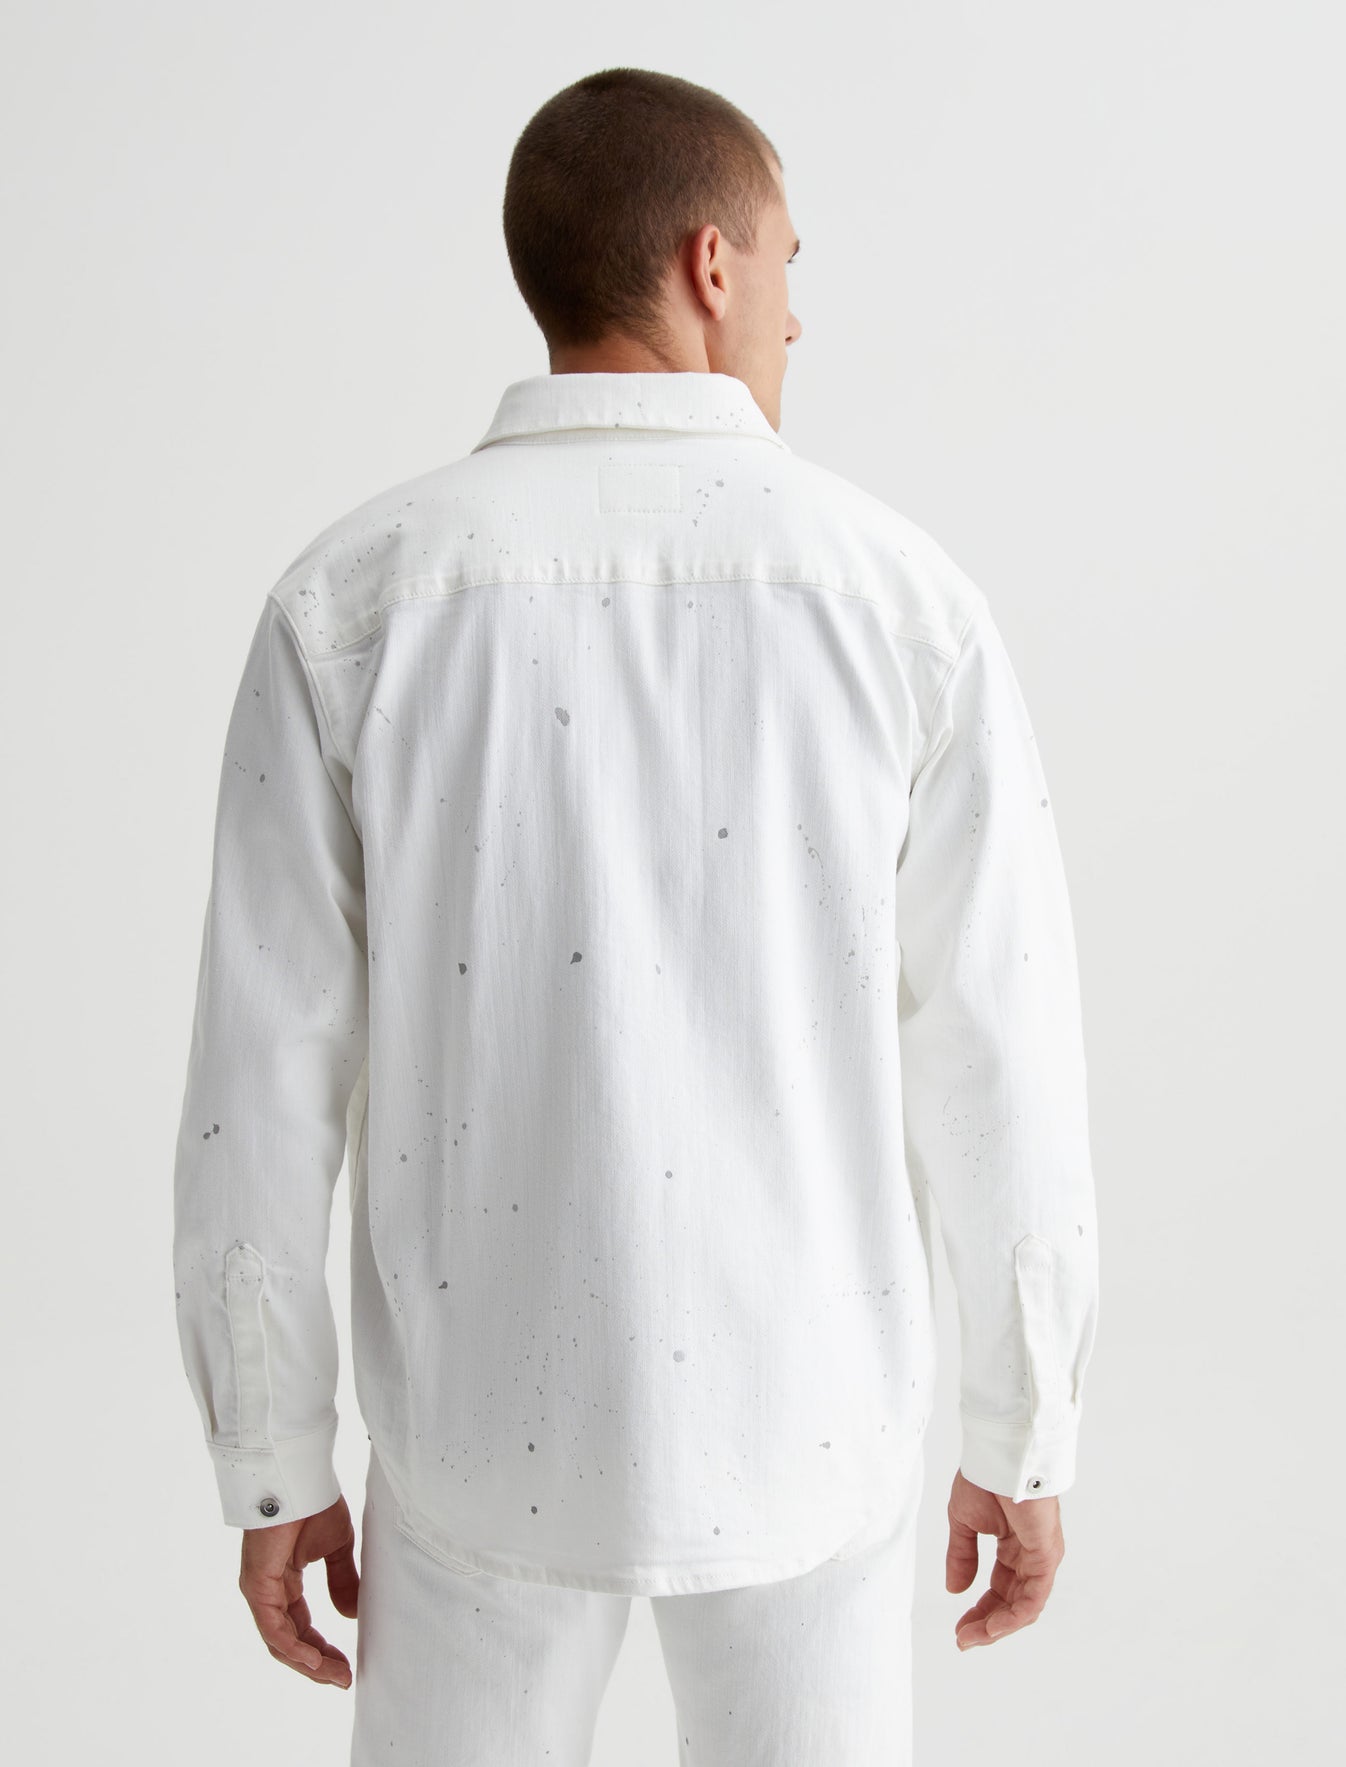 Elias True White Painted Oversized Fit Shirt Jacket Mens Top Photo 6